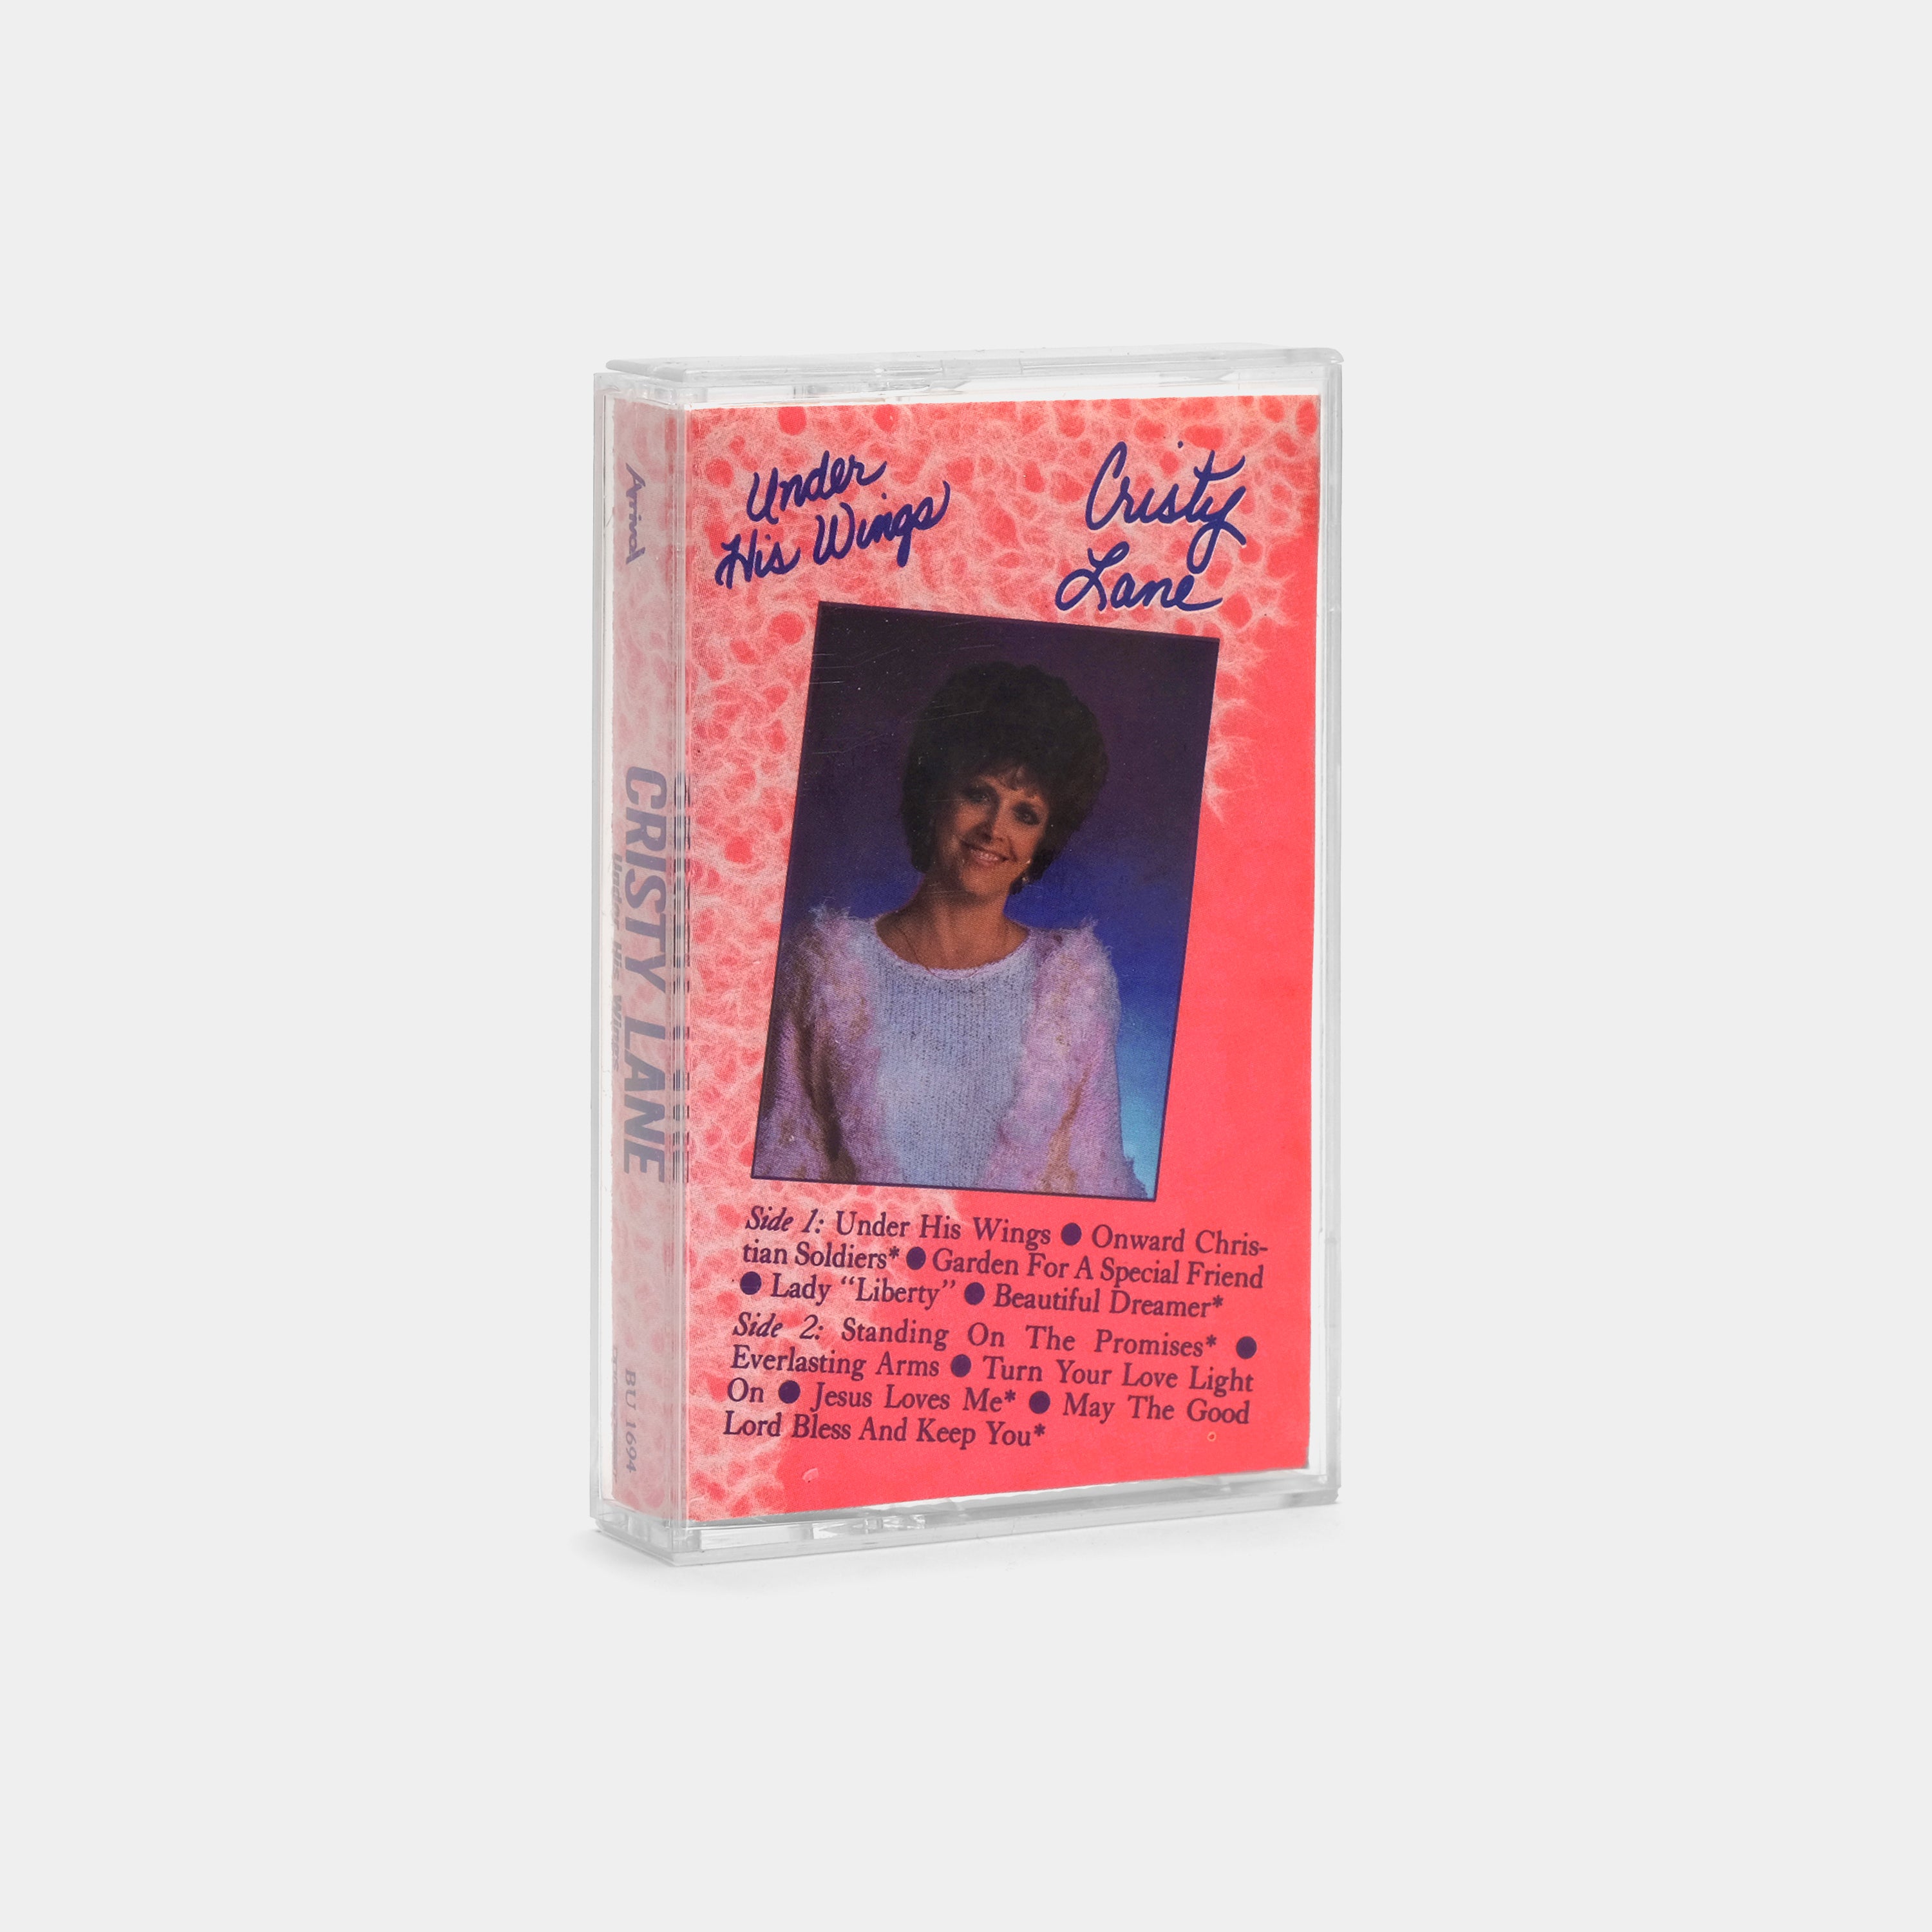 Cristy Lane - Under His Wings Cassette Tape